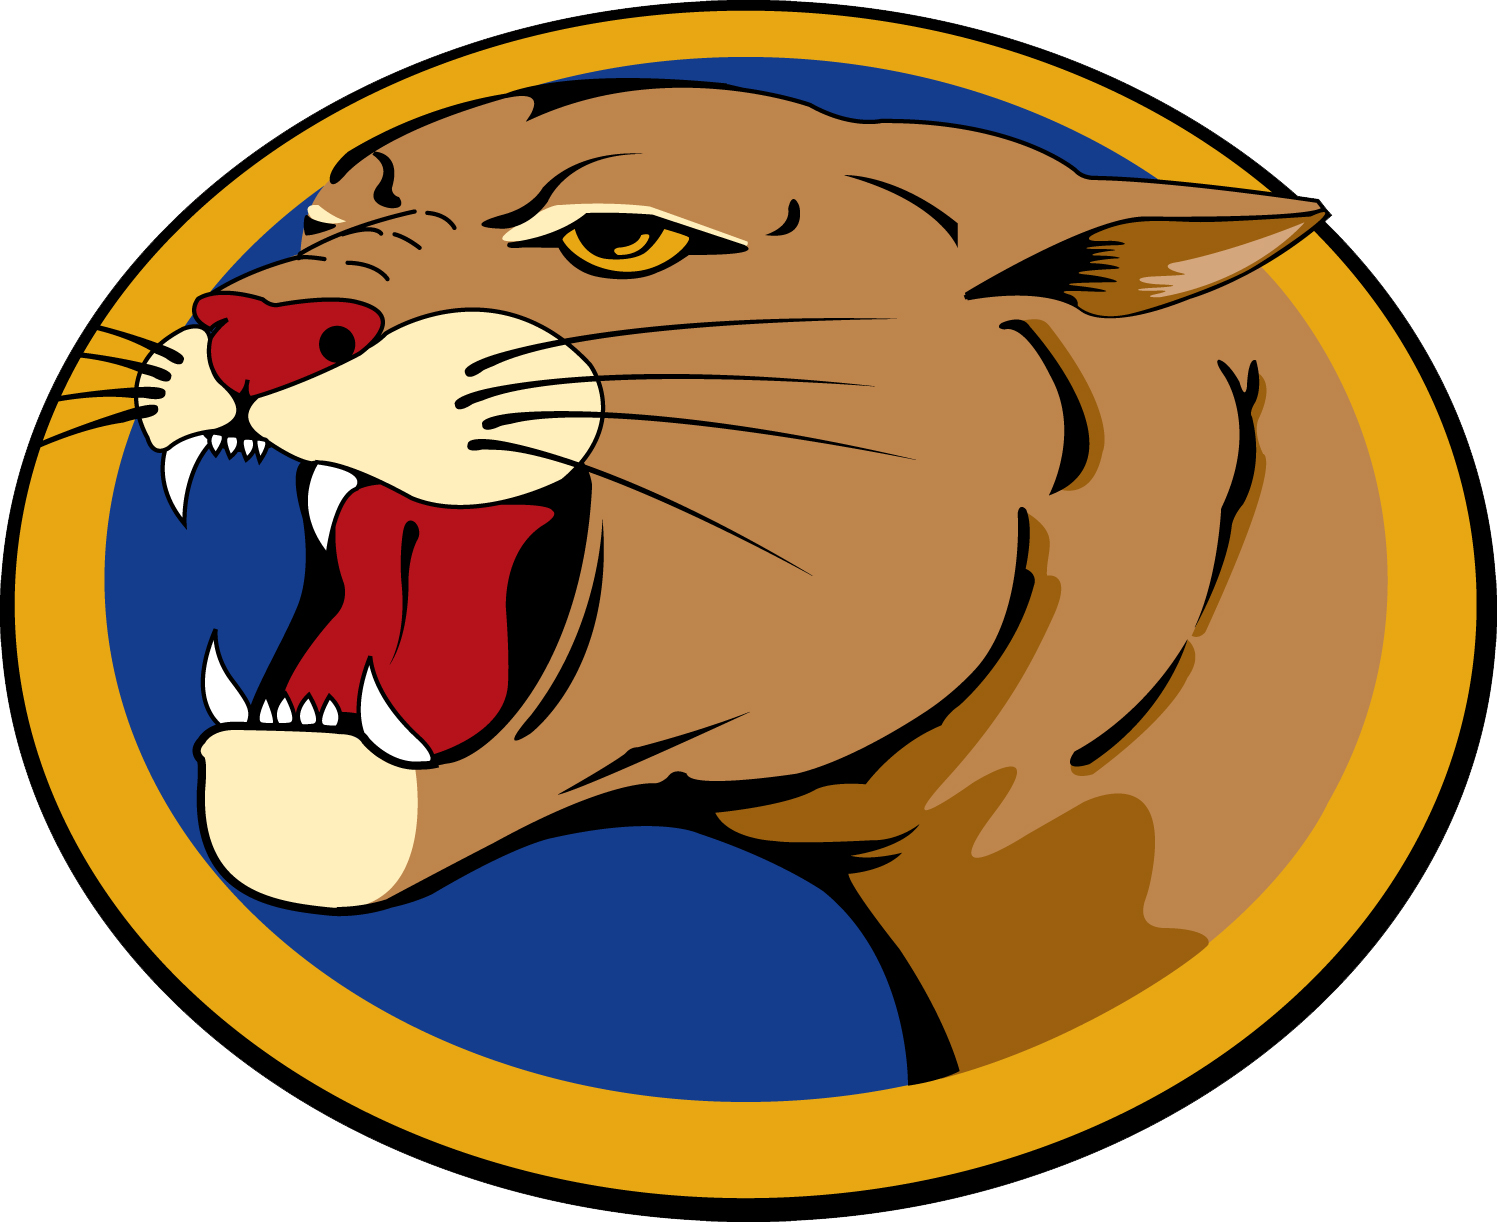 Mascot - Evergreen High School Cougars (1497x1222)